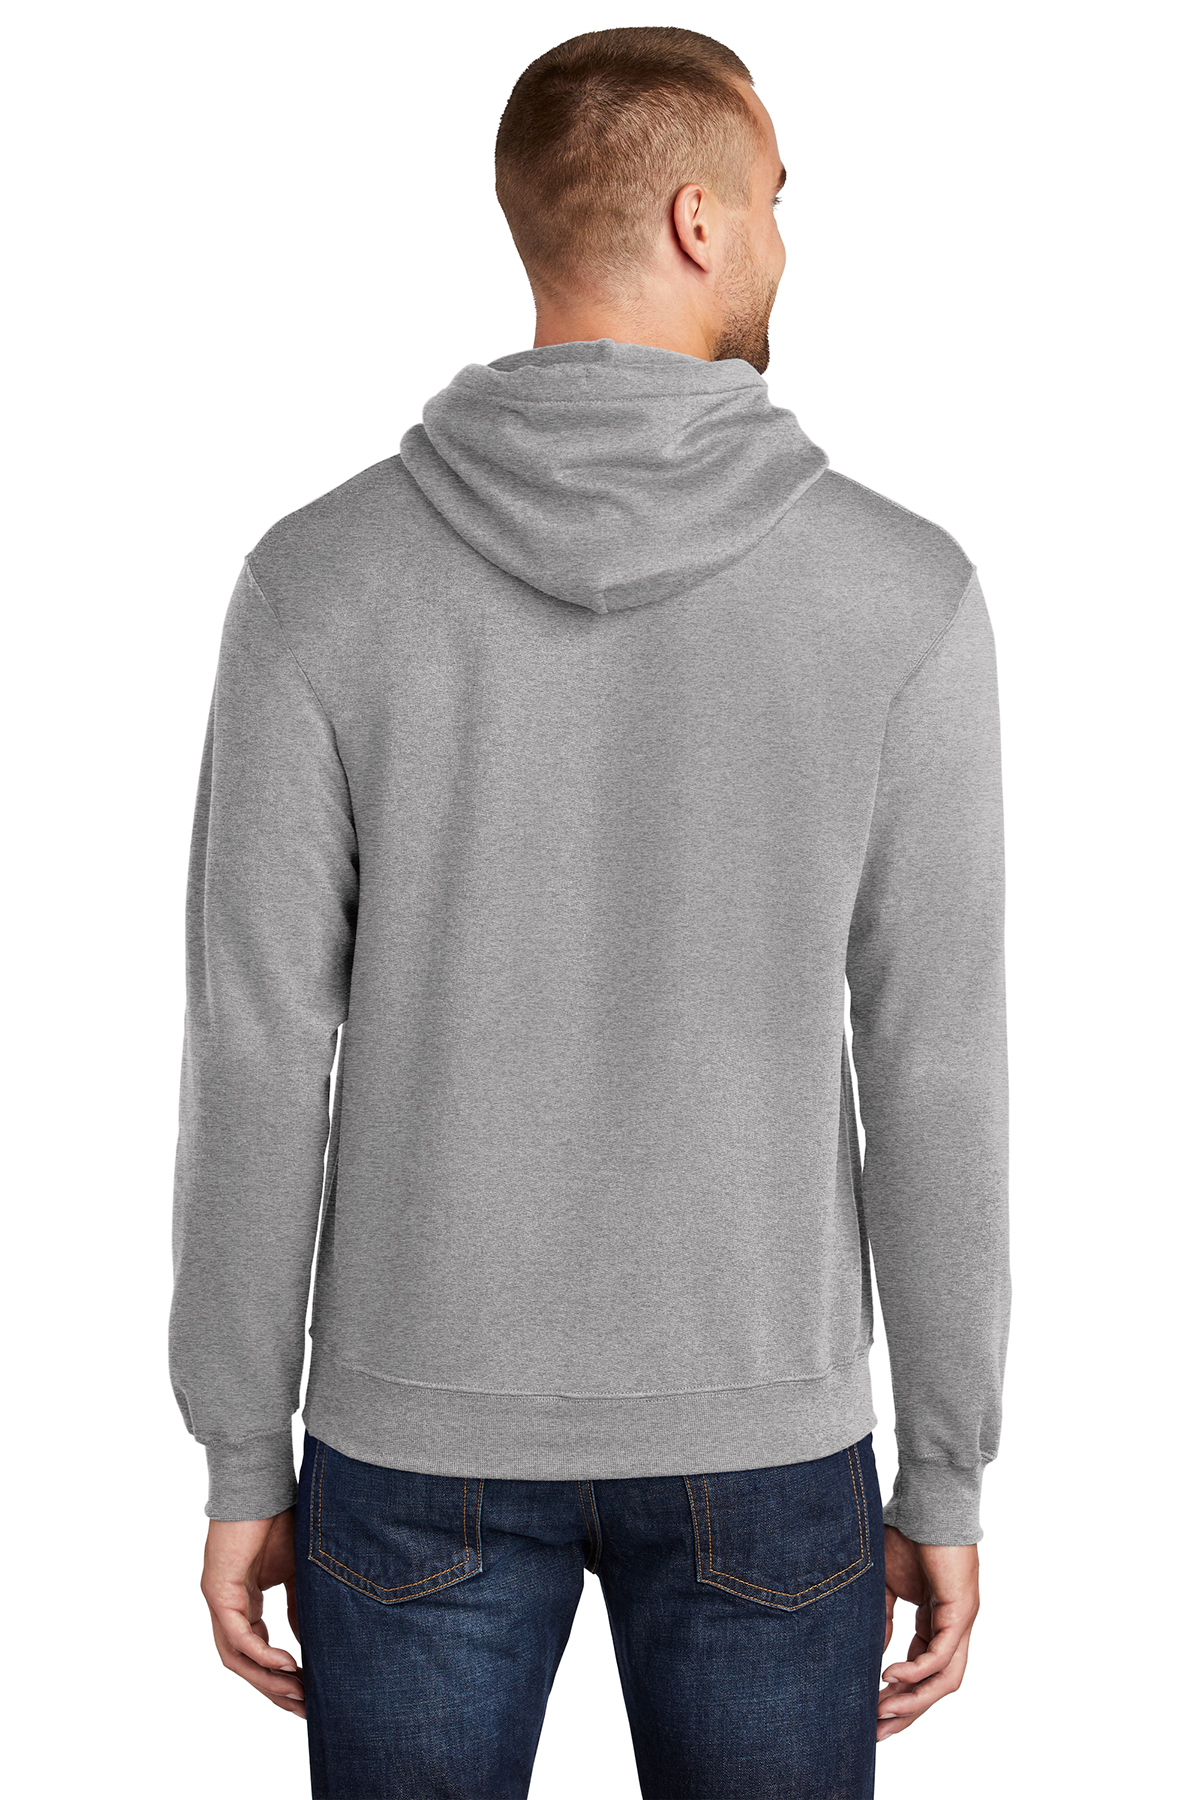 PC78ZH Dark Heather Grey M Port & Company Core Fleece Full-Zip Hooded Sweatshirt